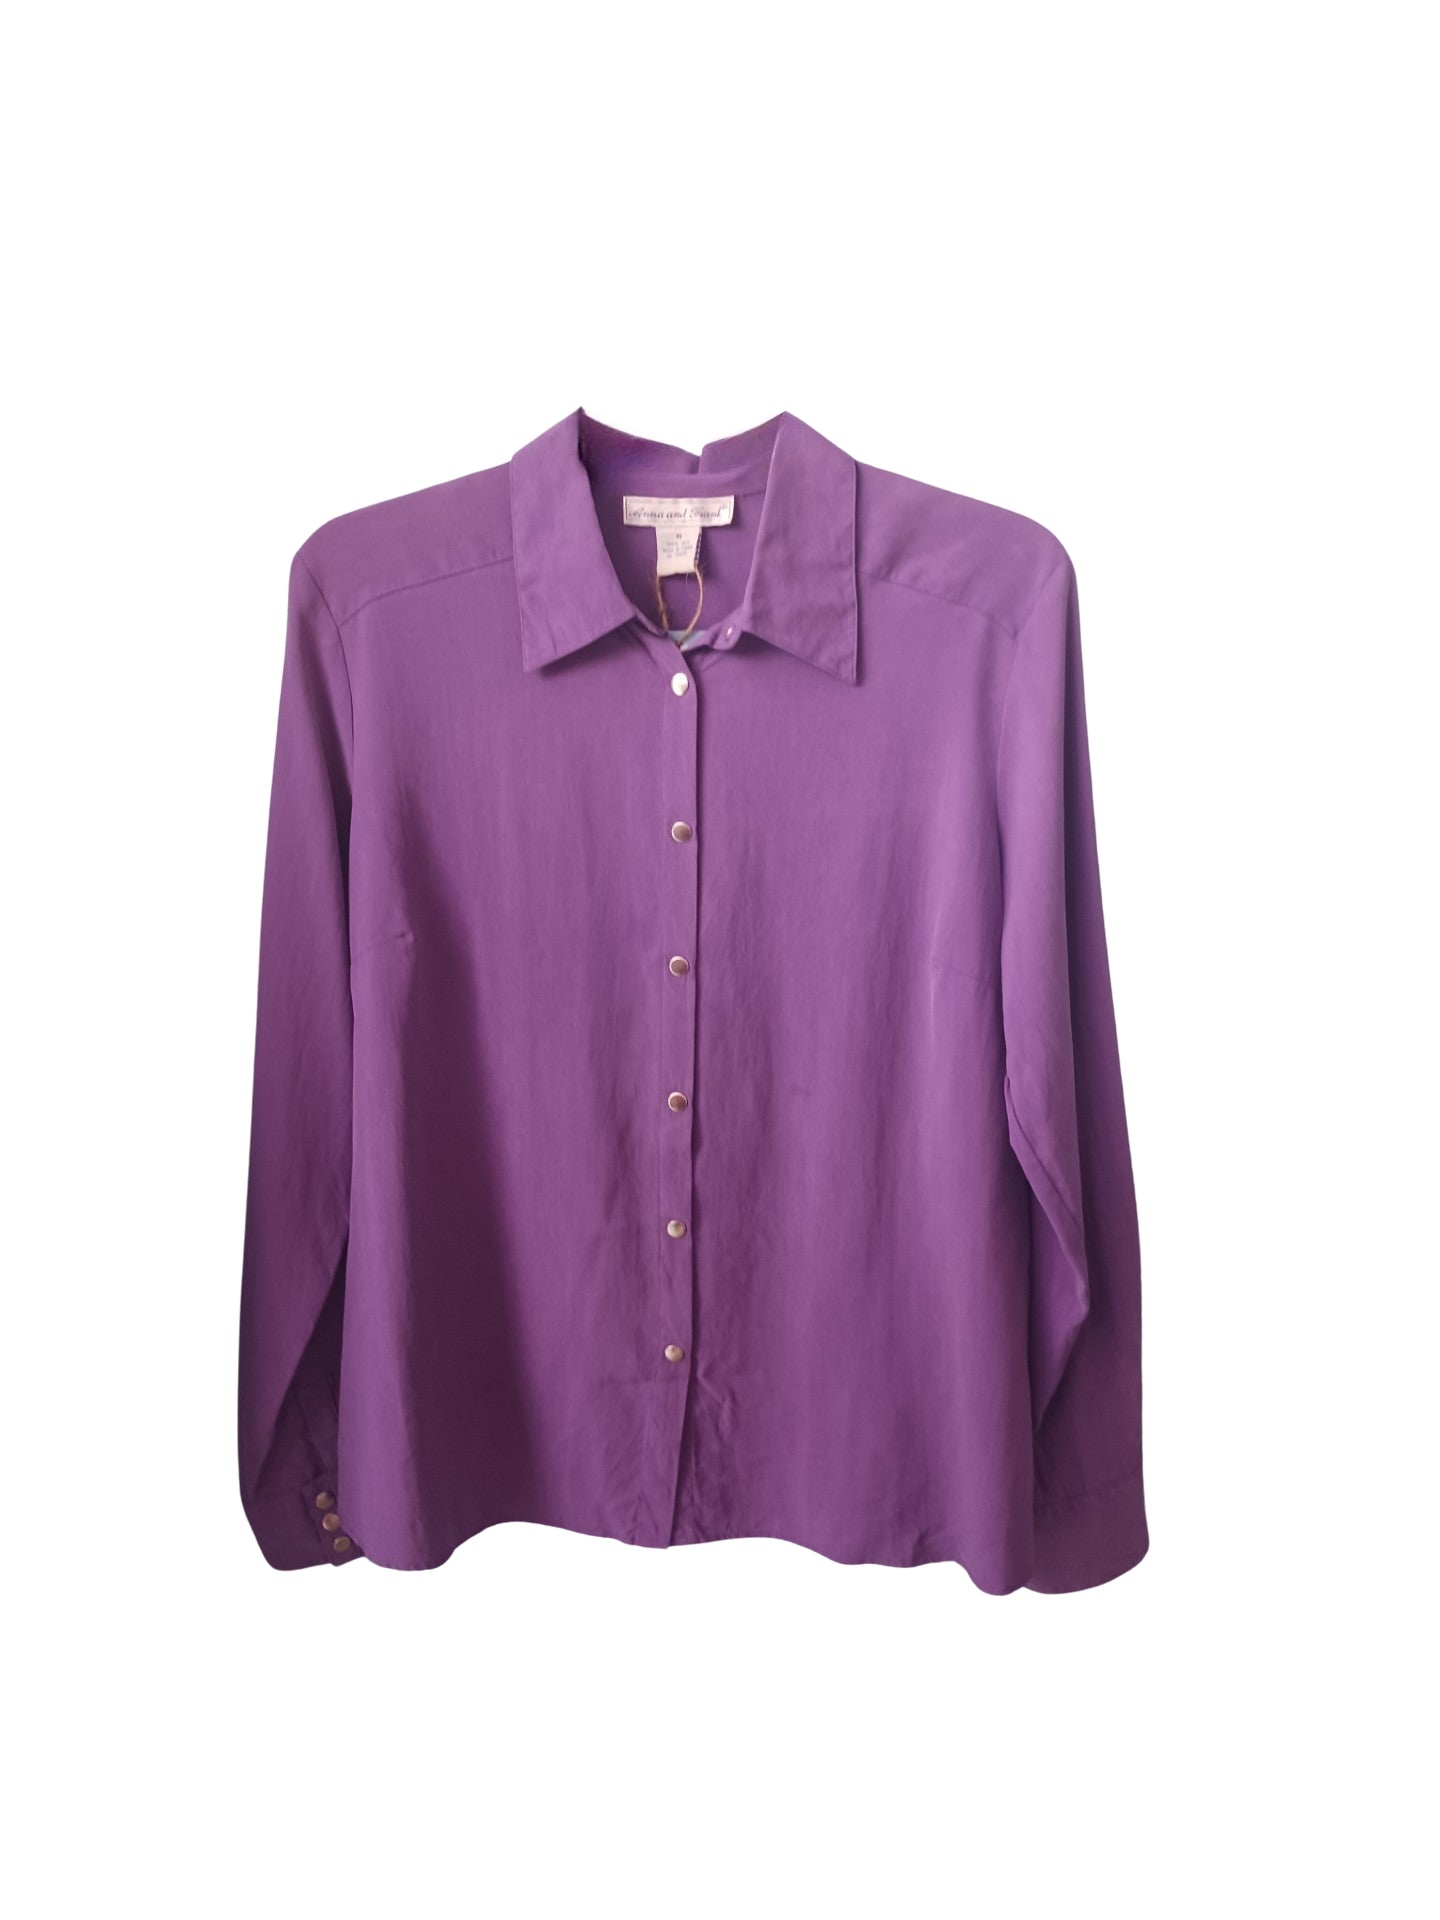 Anna and Frank Silk Shirt, Lavender Purple, Size Medium